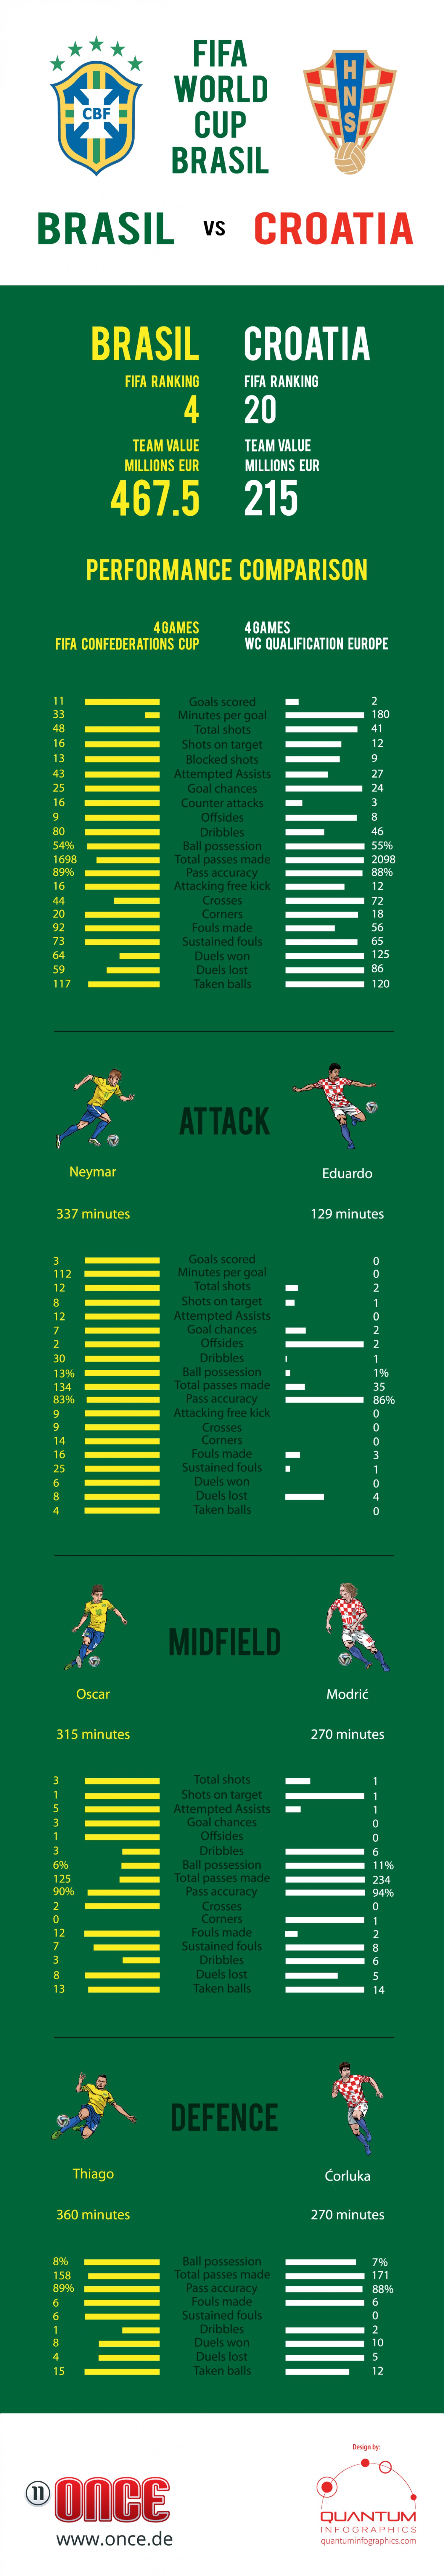 fifa-world-cup--brasil-vs-croatia_5383b1b82c558_w1500